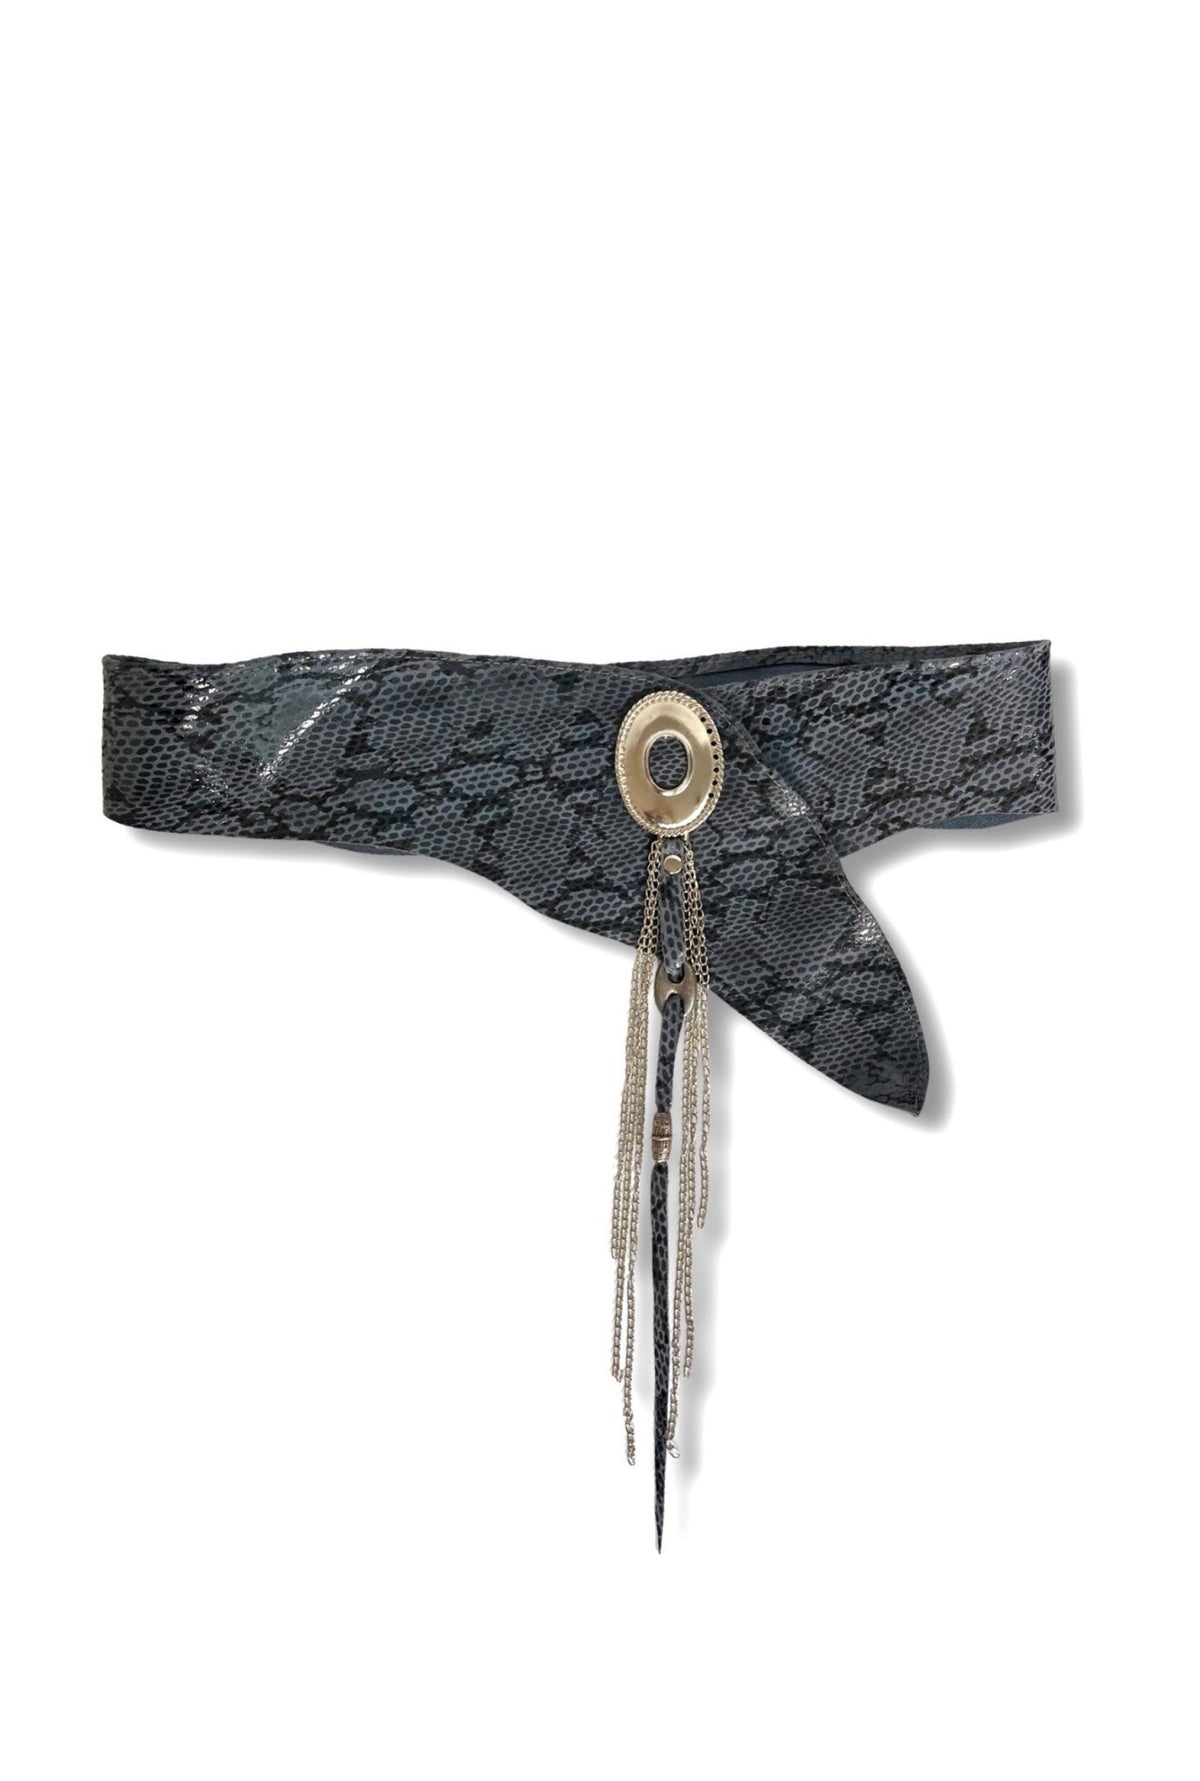 Grey Leather Snake Print Belt With Silver Tassel By Yan Neo London - Yan Neo London